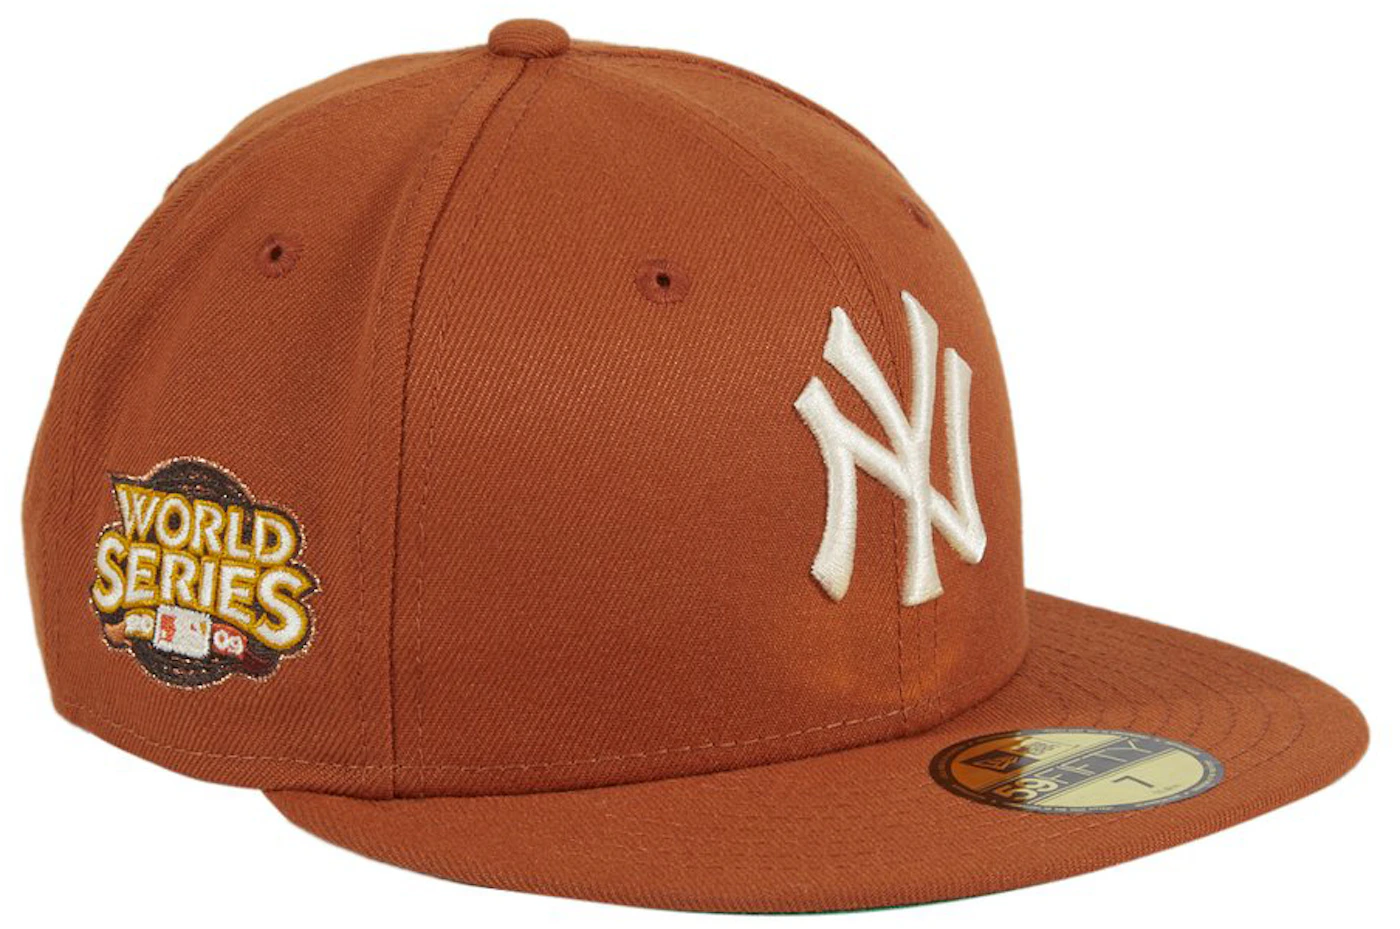 2009 New York Yankees 27 MLB World Series Champions Jersey Patch